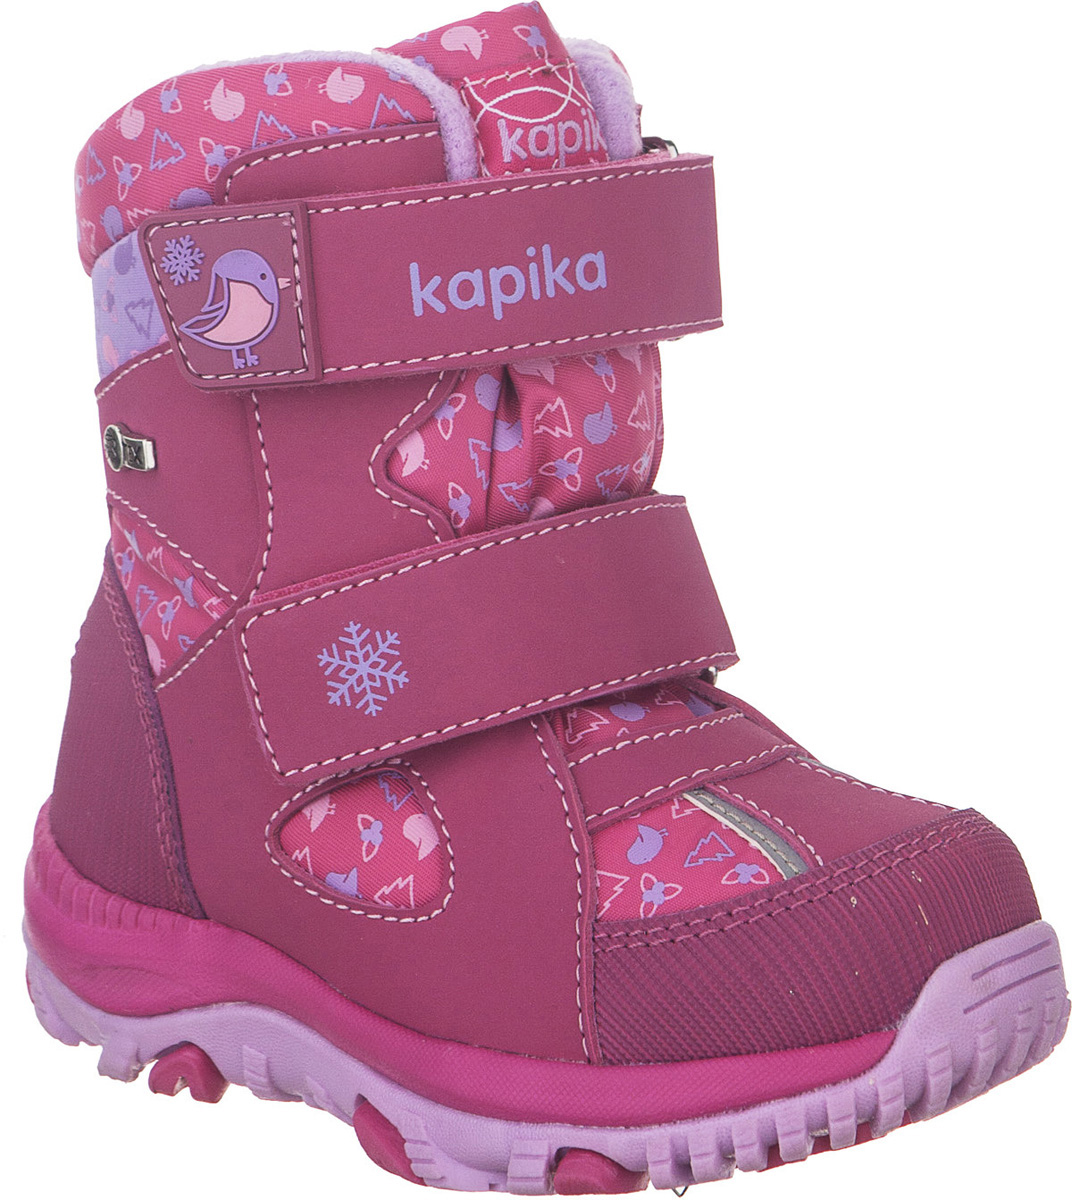 Ботинки для девочки Kapika KapiTEX, цвет: фуксия. 41223-2. Размер 25